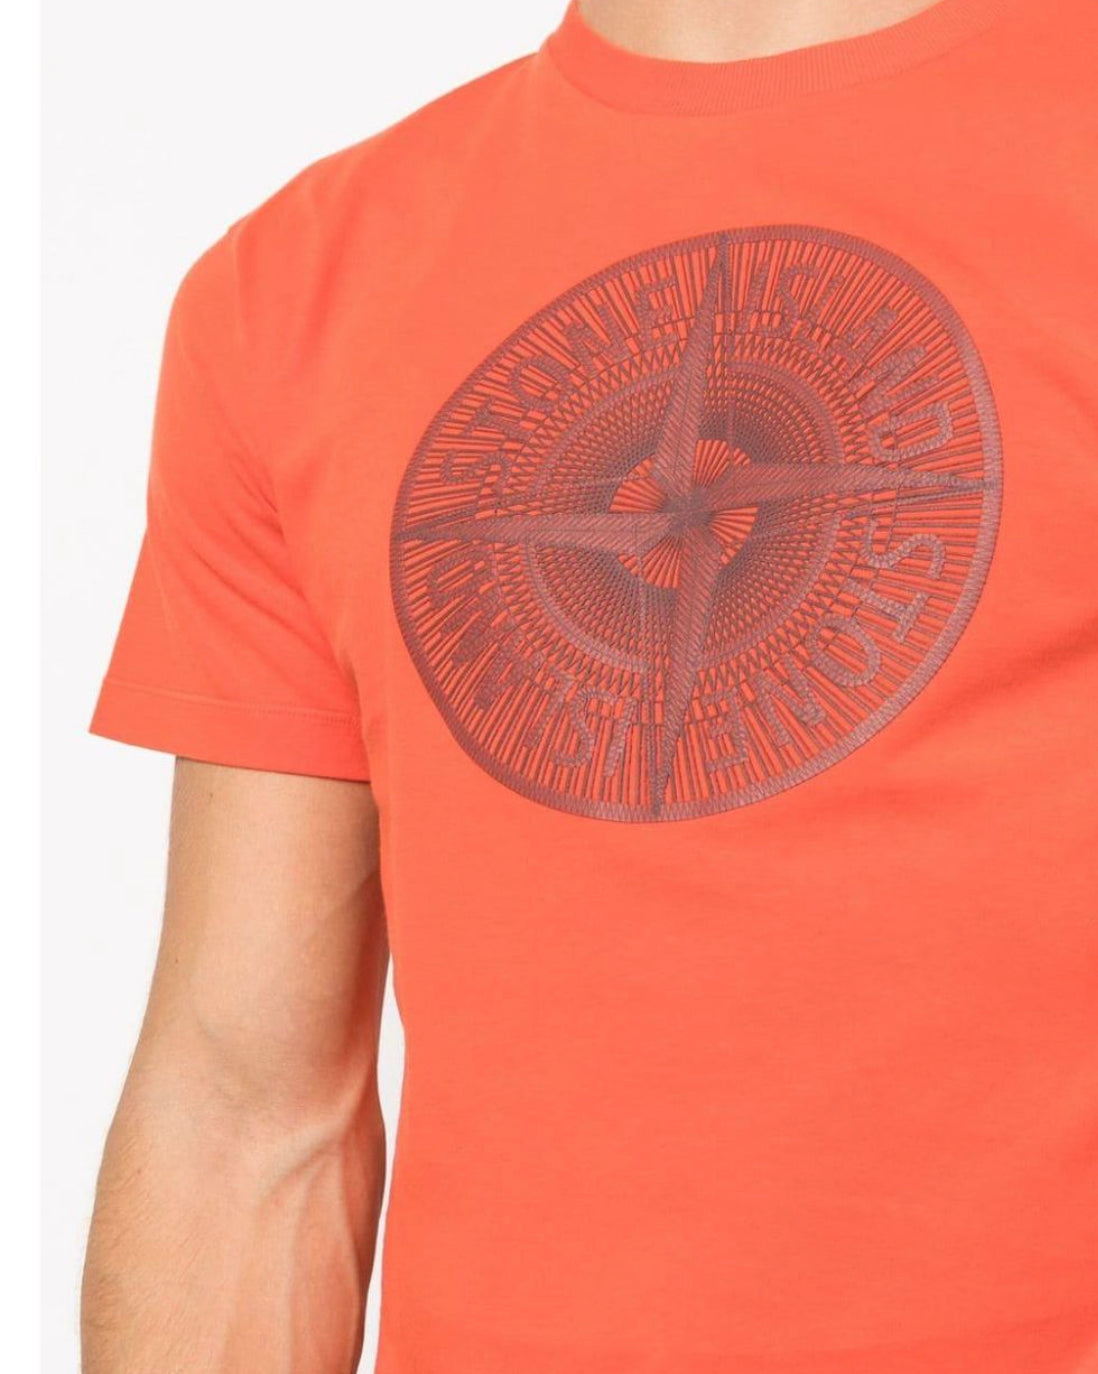 Stone Island Compass Logo T-Shirt